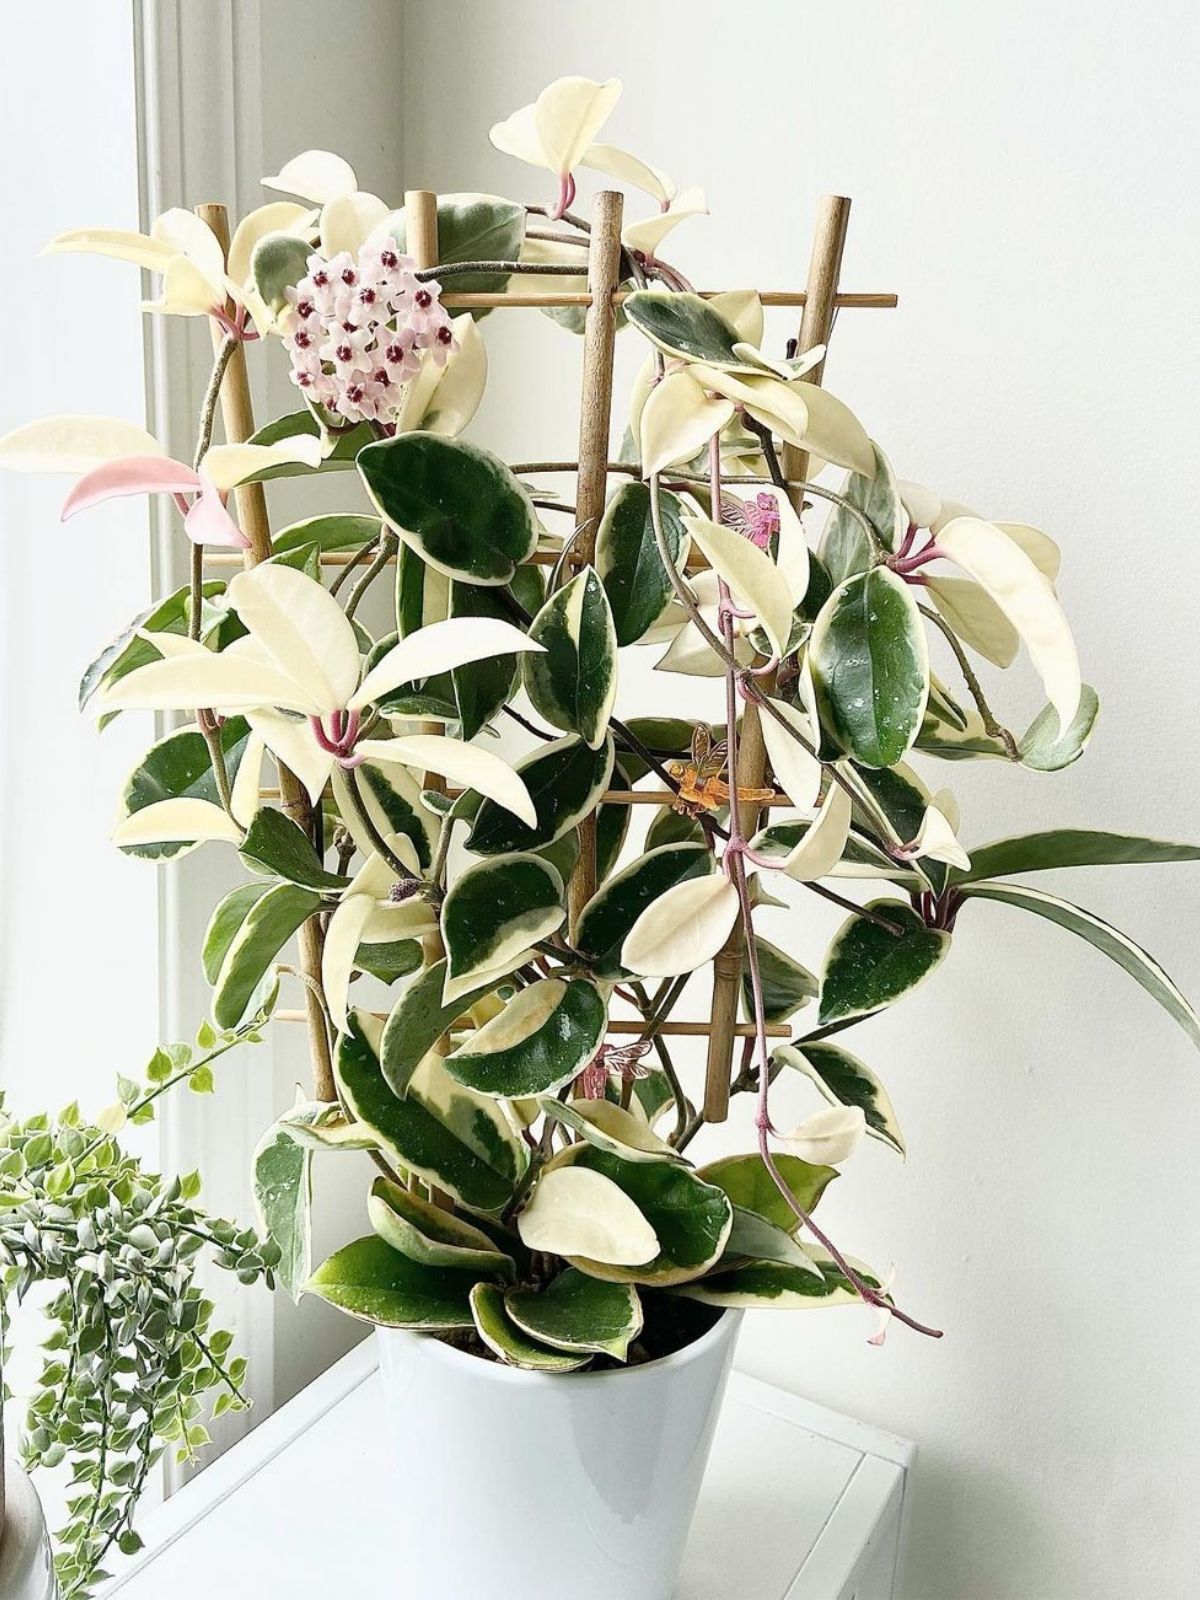 Hoya carnosa krimson queen flowering - credits pottersjungle - on thursd